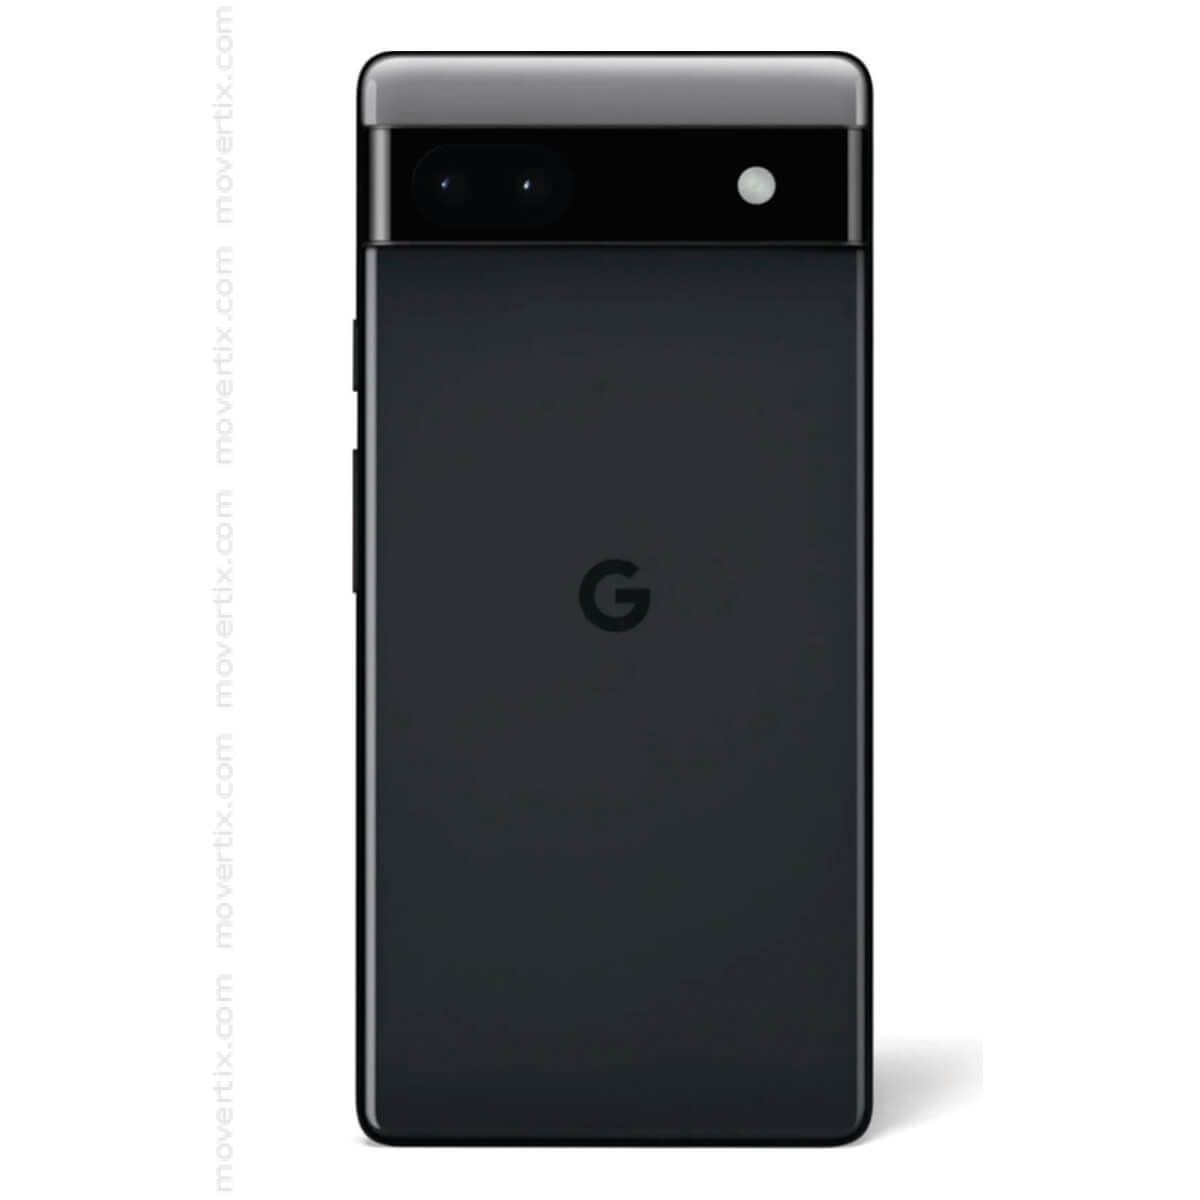 Google Pixel 6a 5G Charcoal 128GB